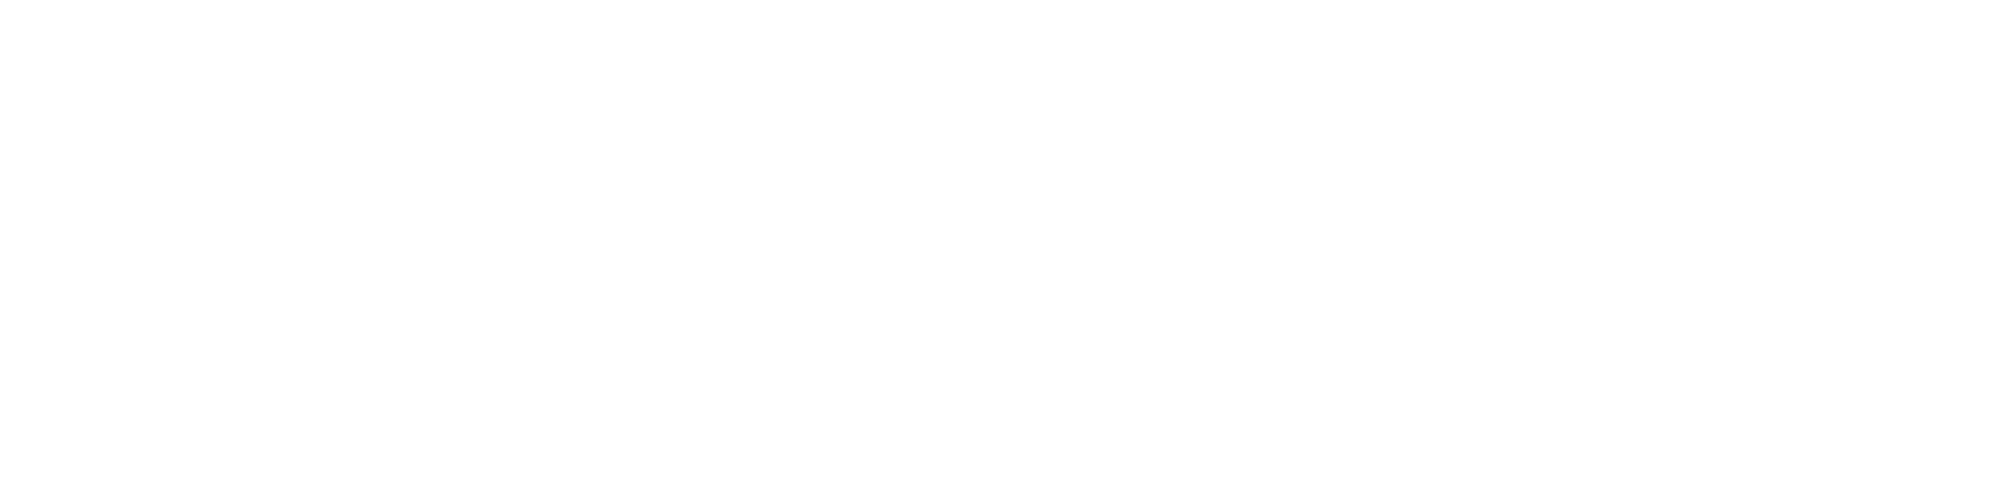 52nd LPGA Championship Konica Minolta cup